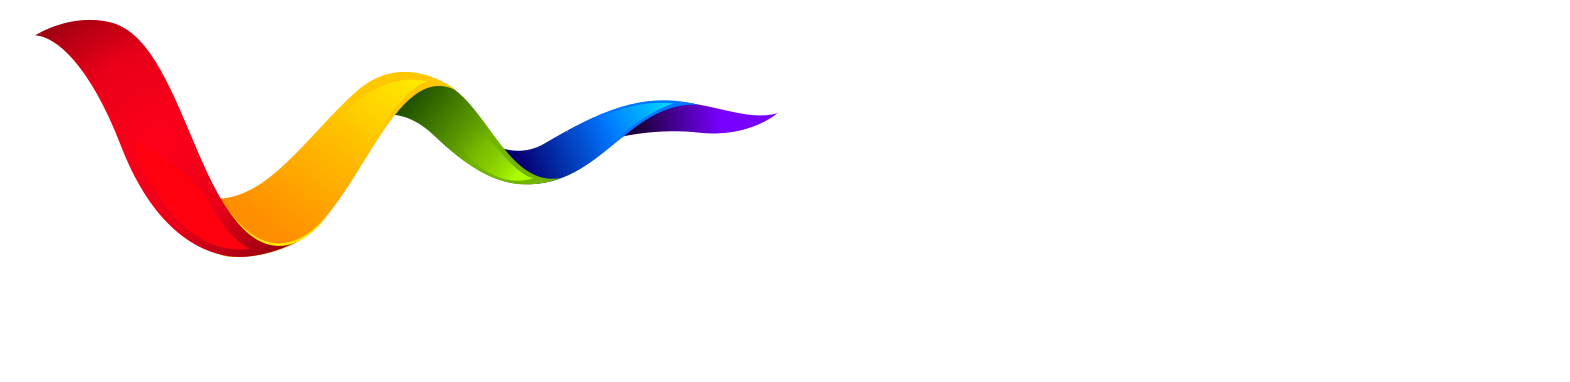 Slipstream Digital Logo